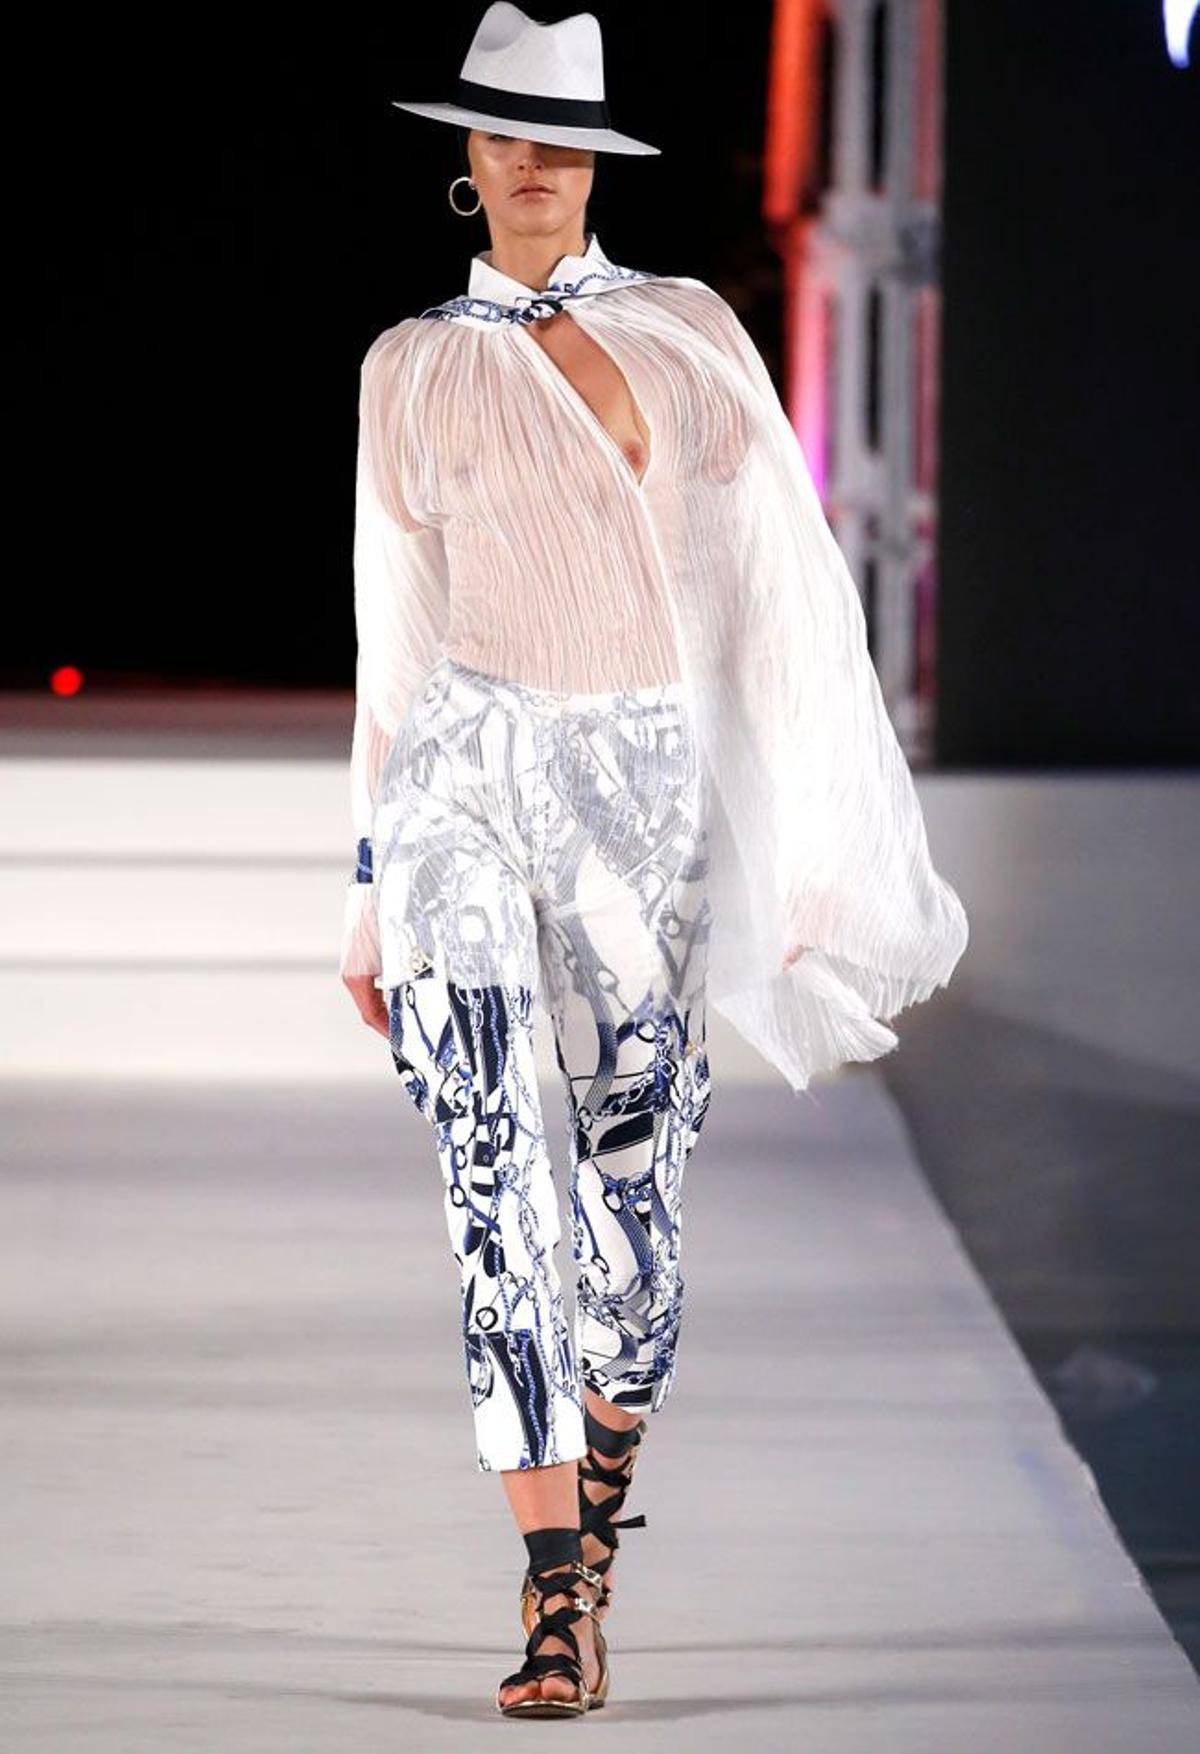 Mercedes Benz Fashion Weekend Ibiza: Alvarno, look navy